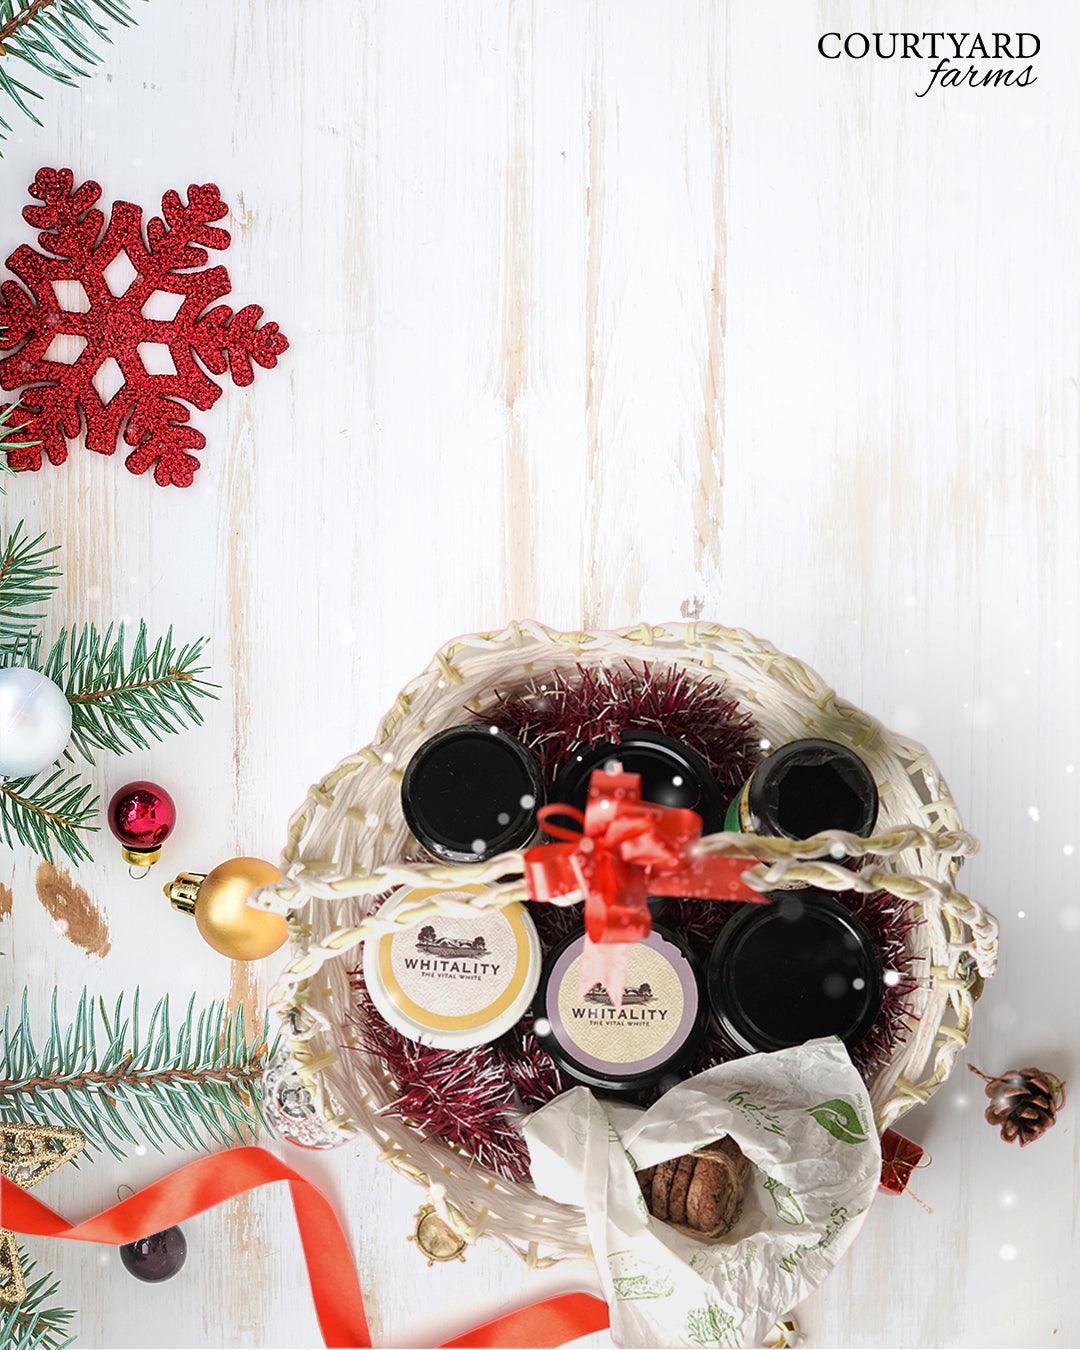 Christmas Gifting ideas for health-conscious food lovers! - Courtyard Farms